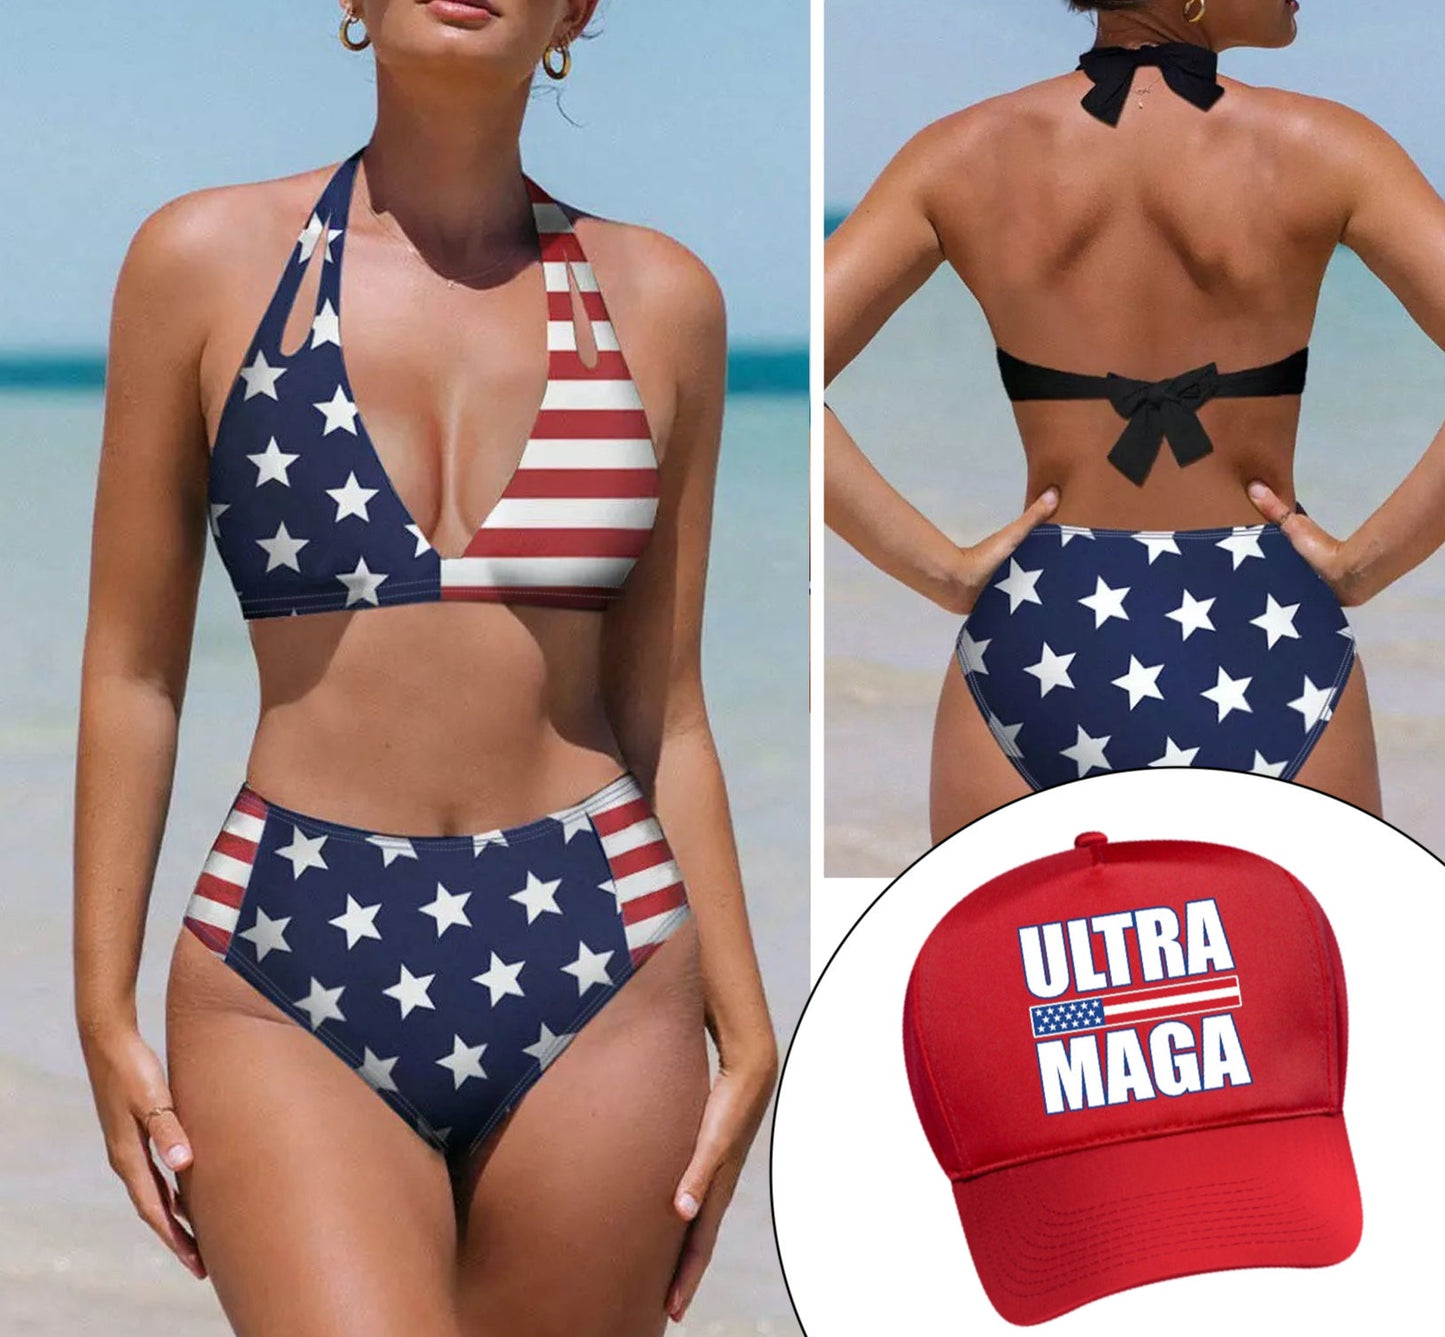 MERICA Women's Bikini (+FREE Hat)